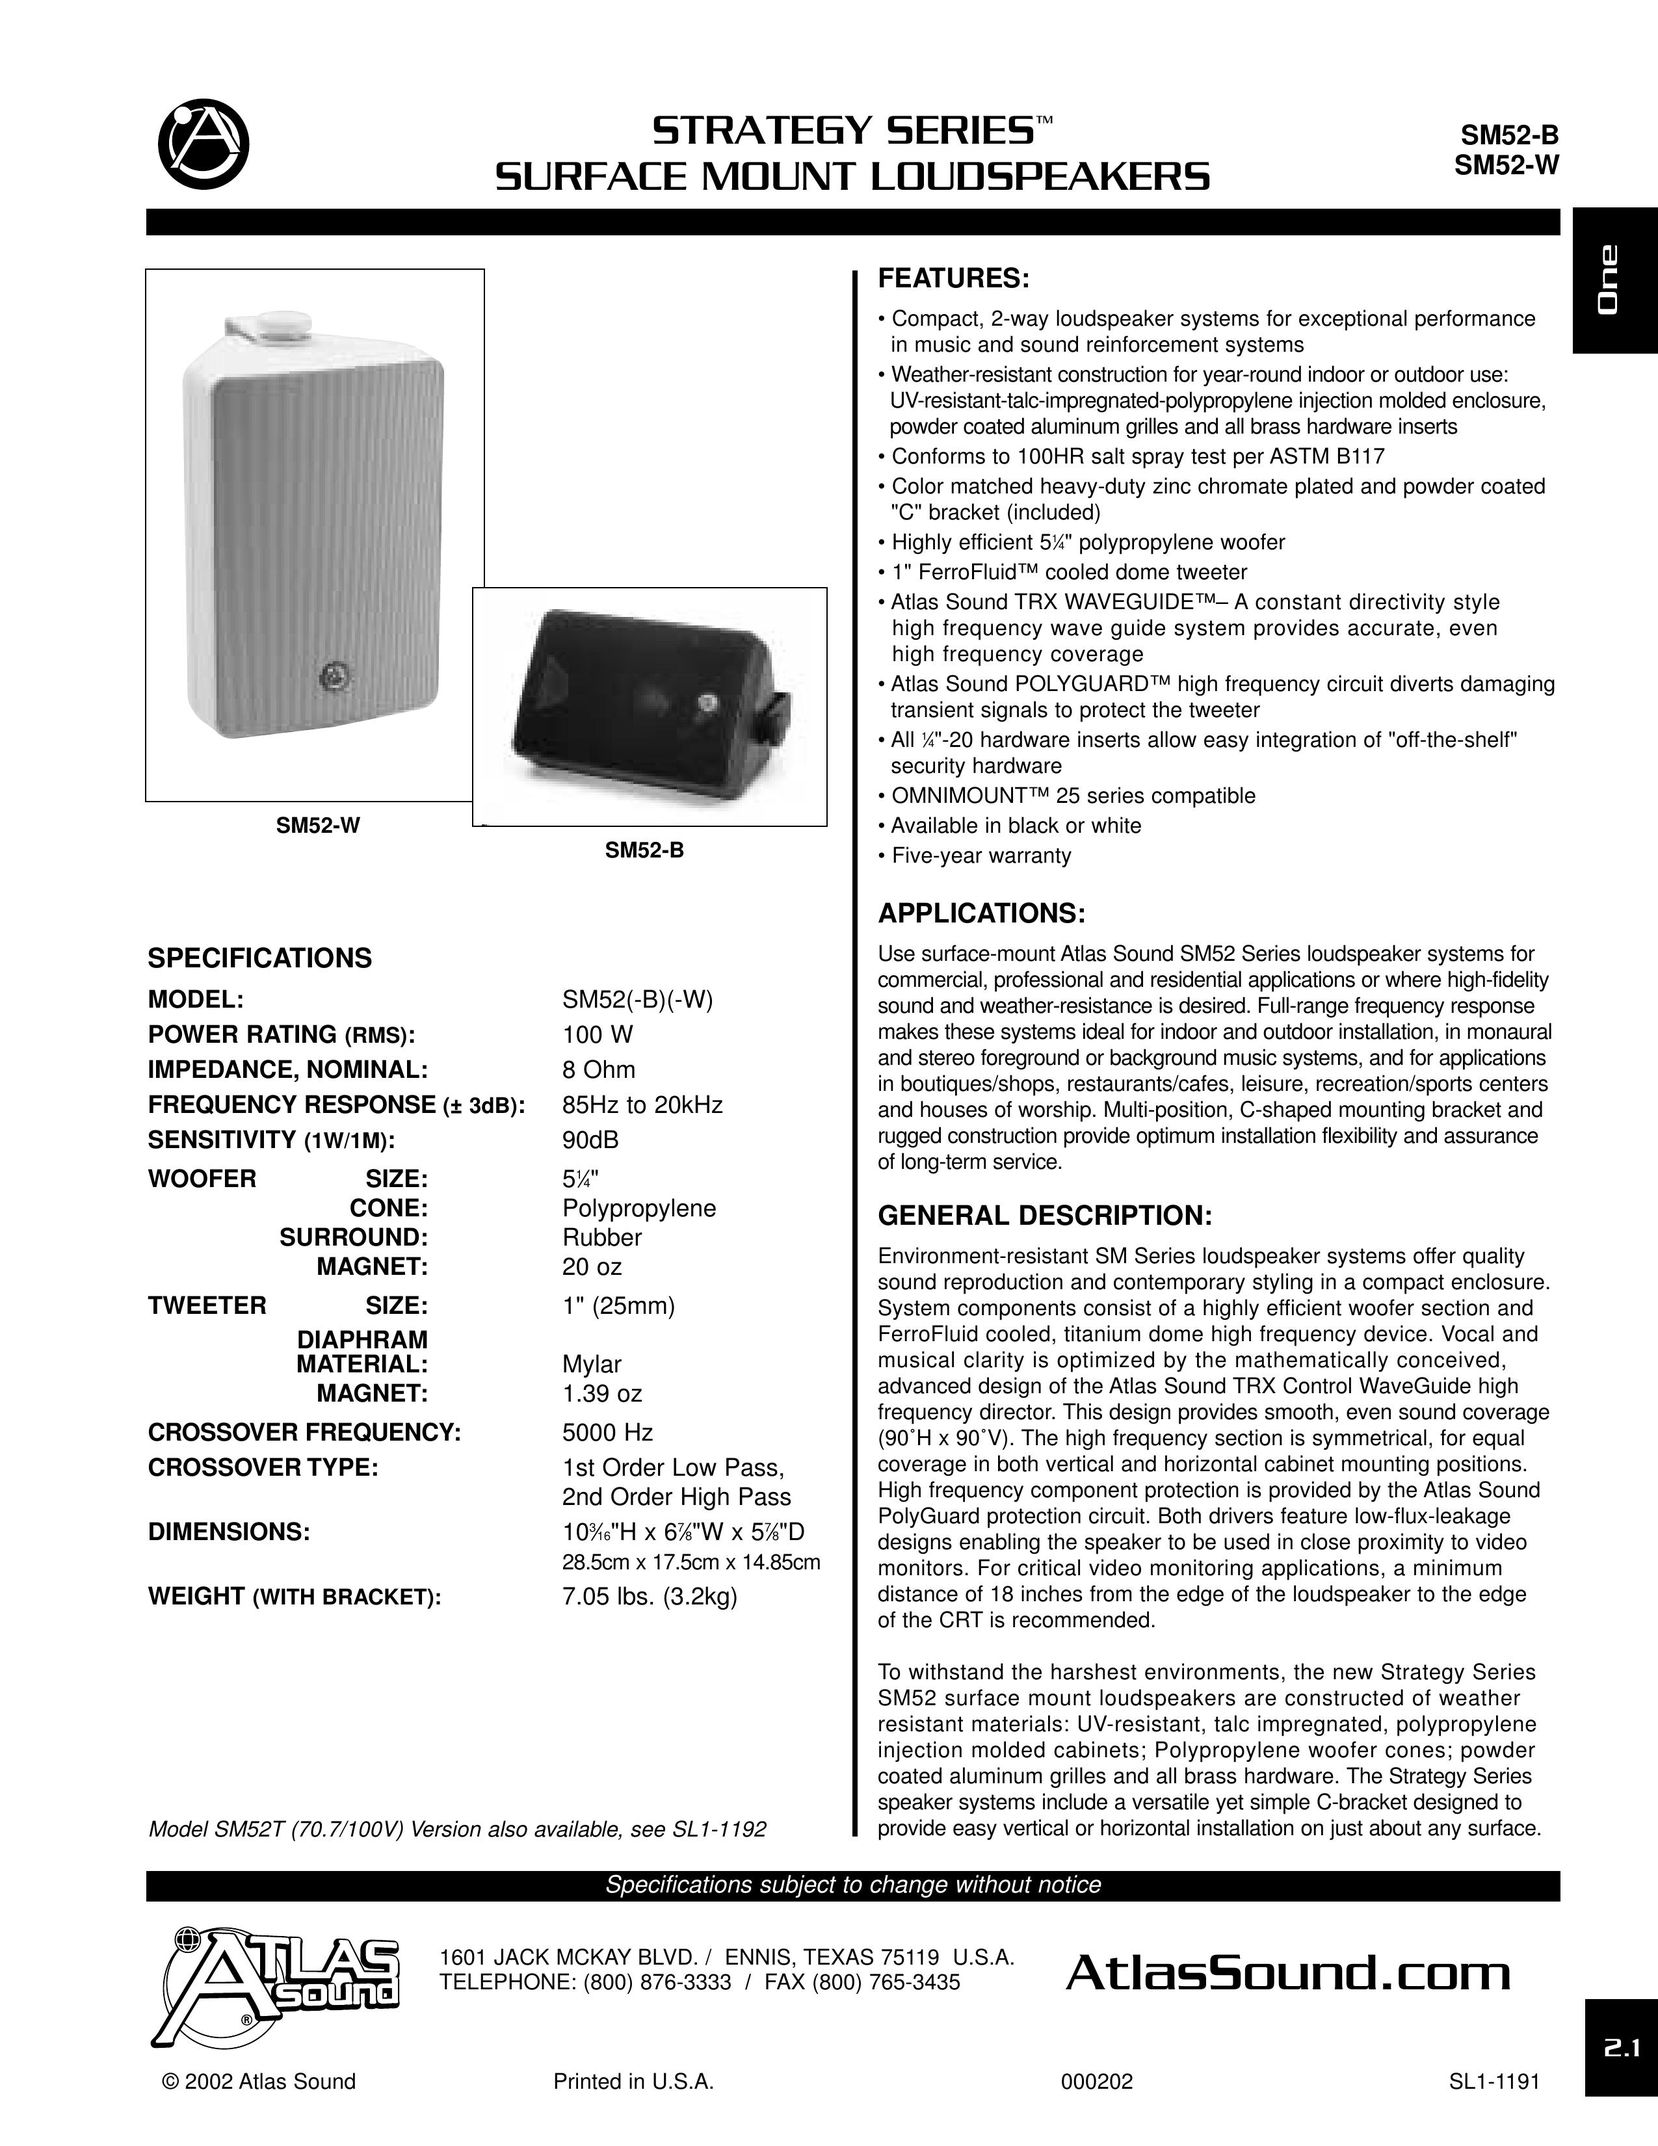 Atlas Sound SM52-W Portable Speaker User Manual